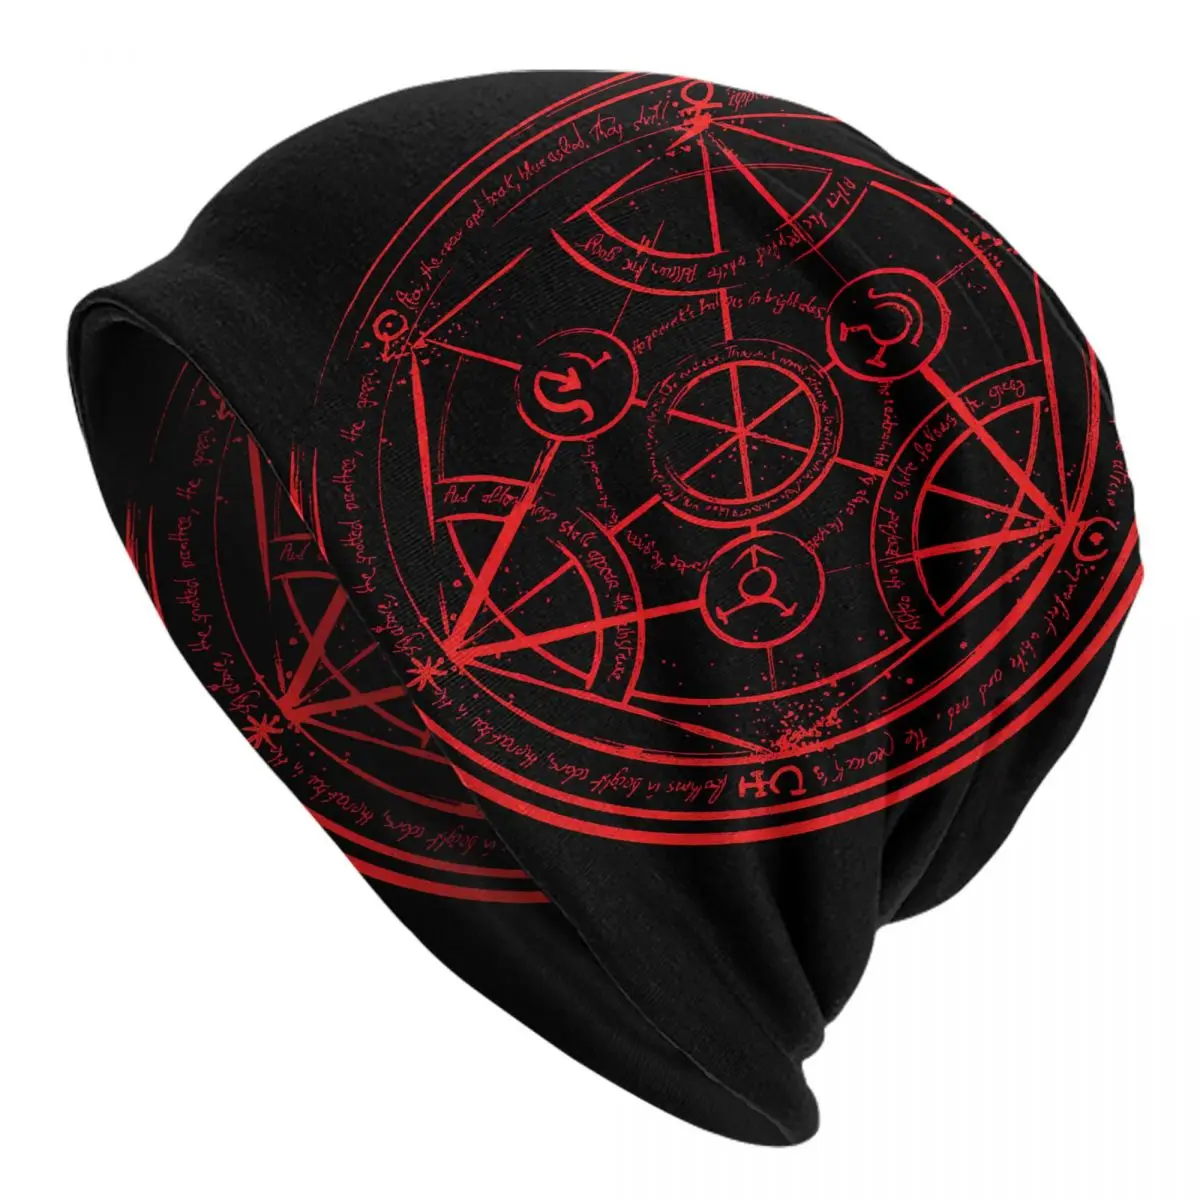 Transmutation Circle Full Metal Alchemist Adult Knit Hat Men's Women's Keep warm winter knitted hat